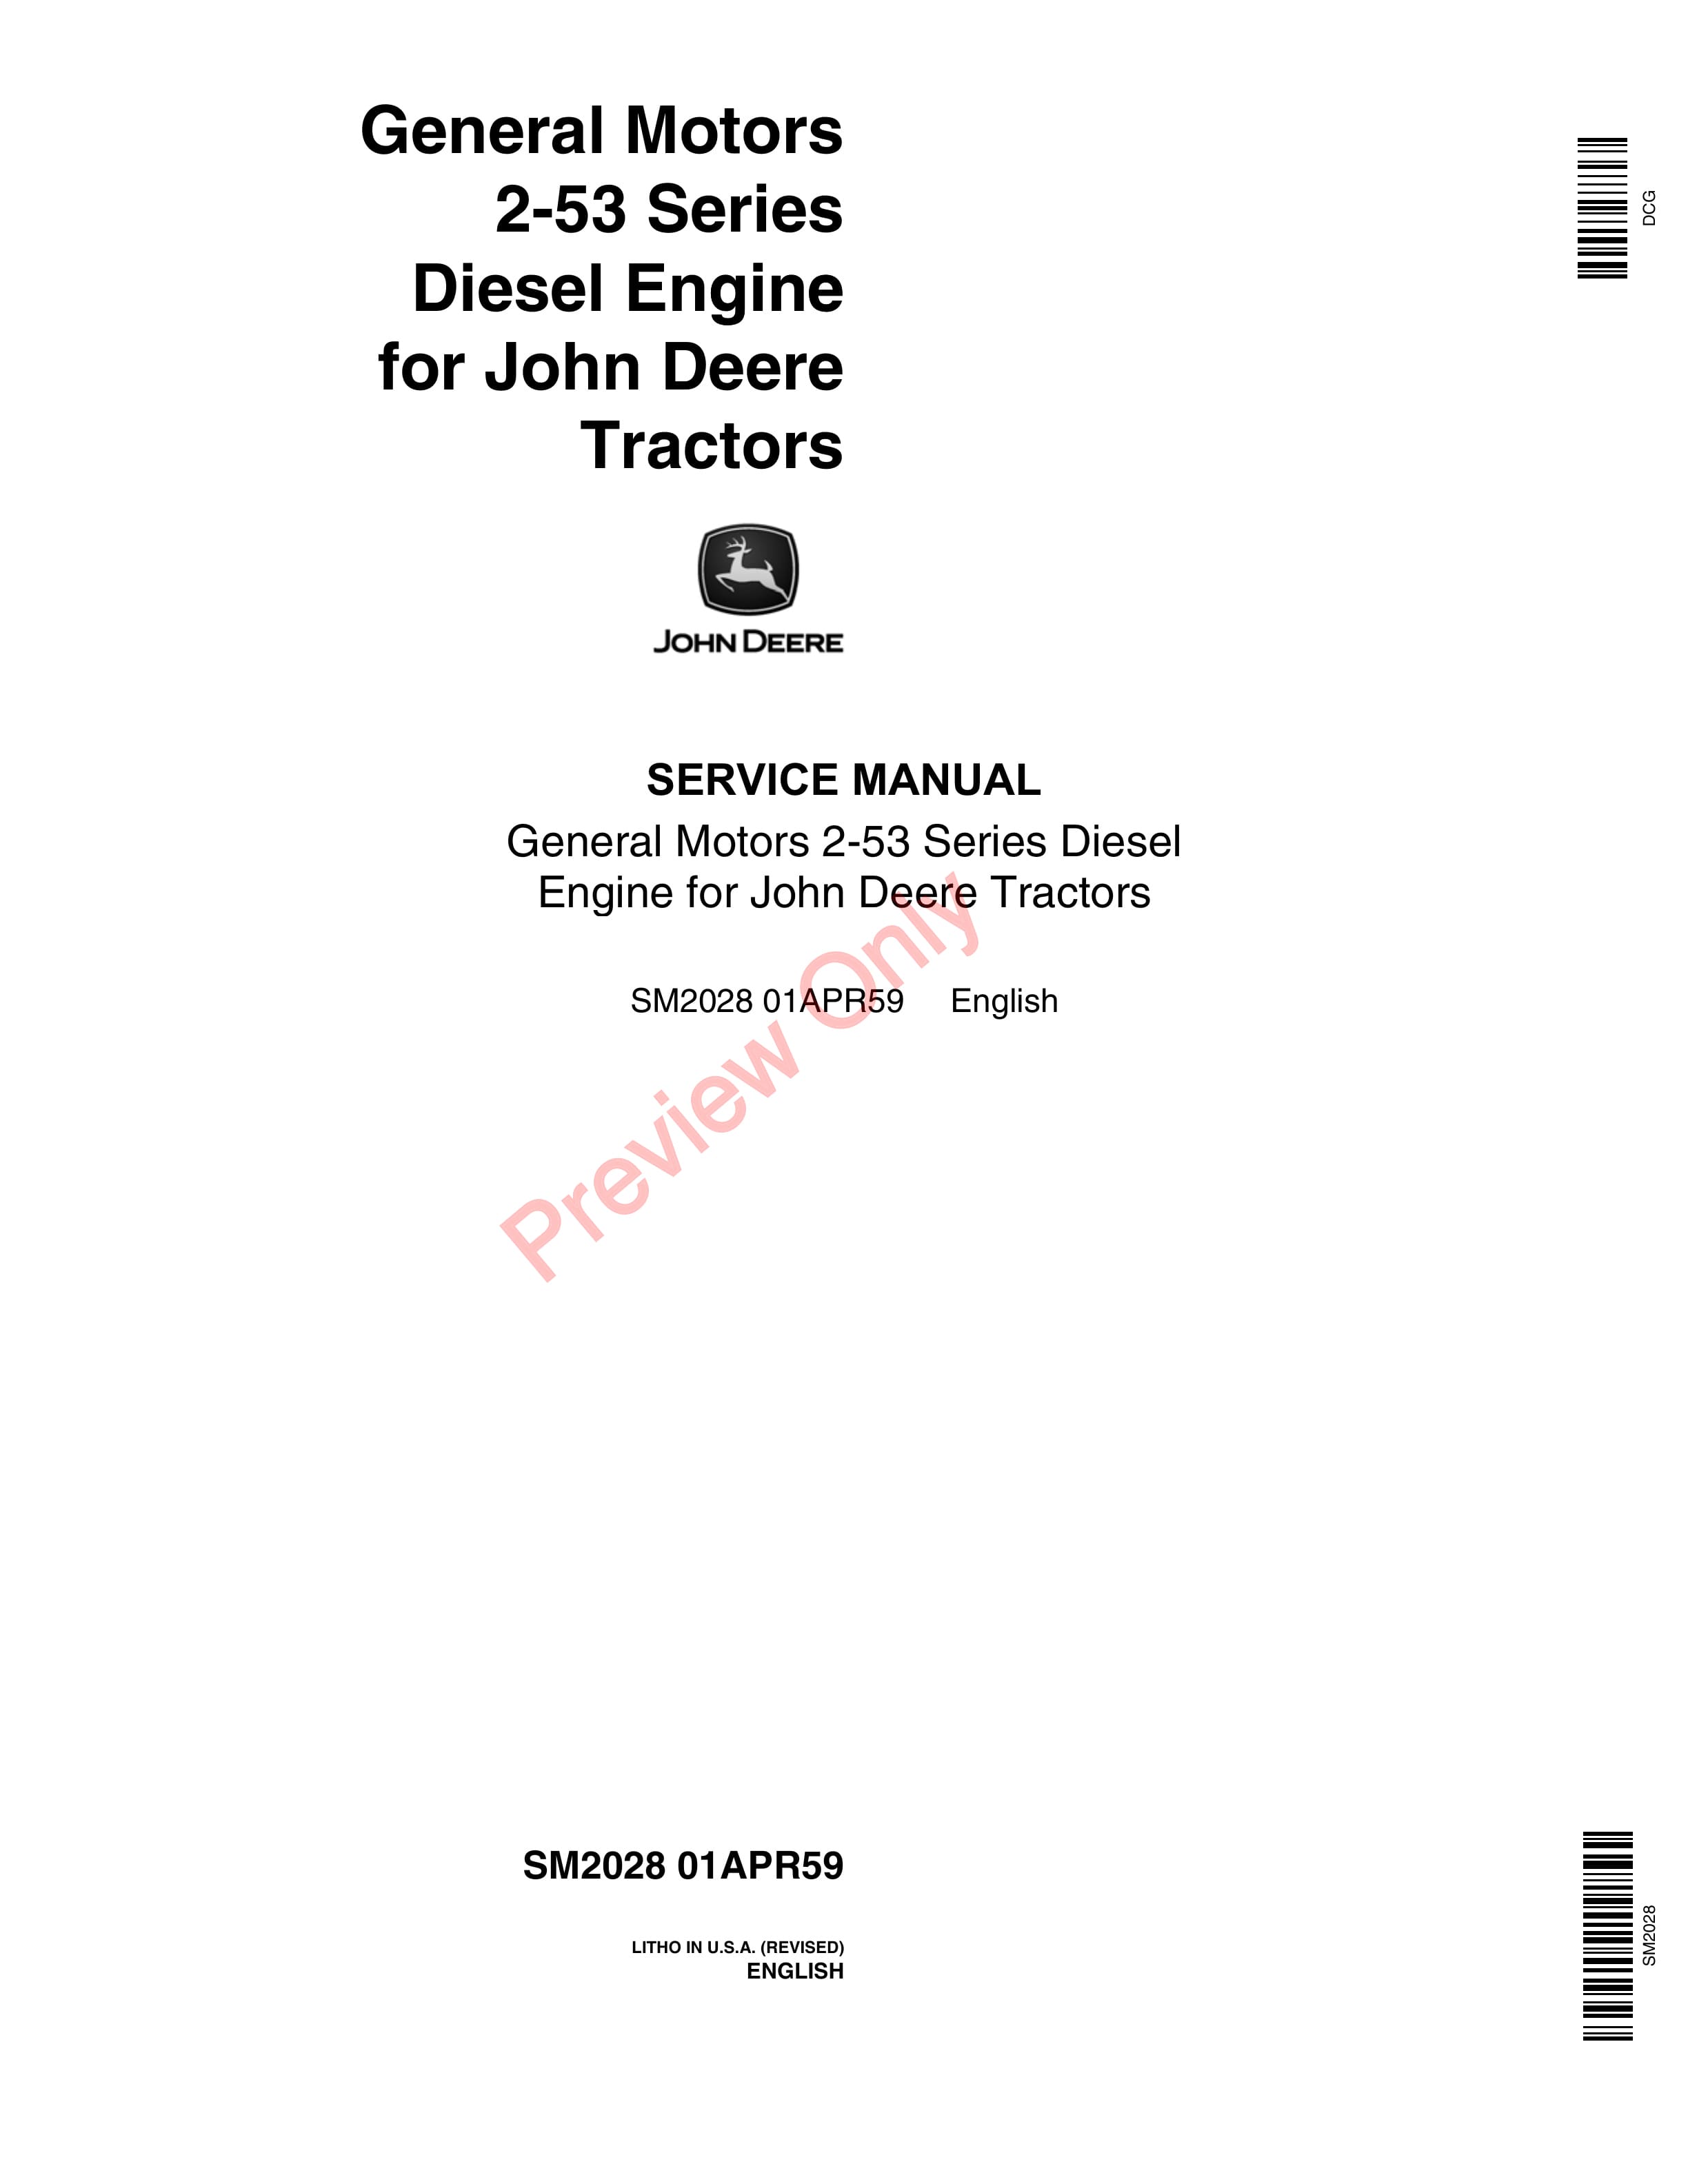 John Deere General Motors 2-53 Series Diesel Engine Tractors Service Manual SM2028 01APR59-1